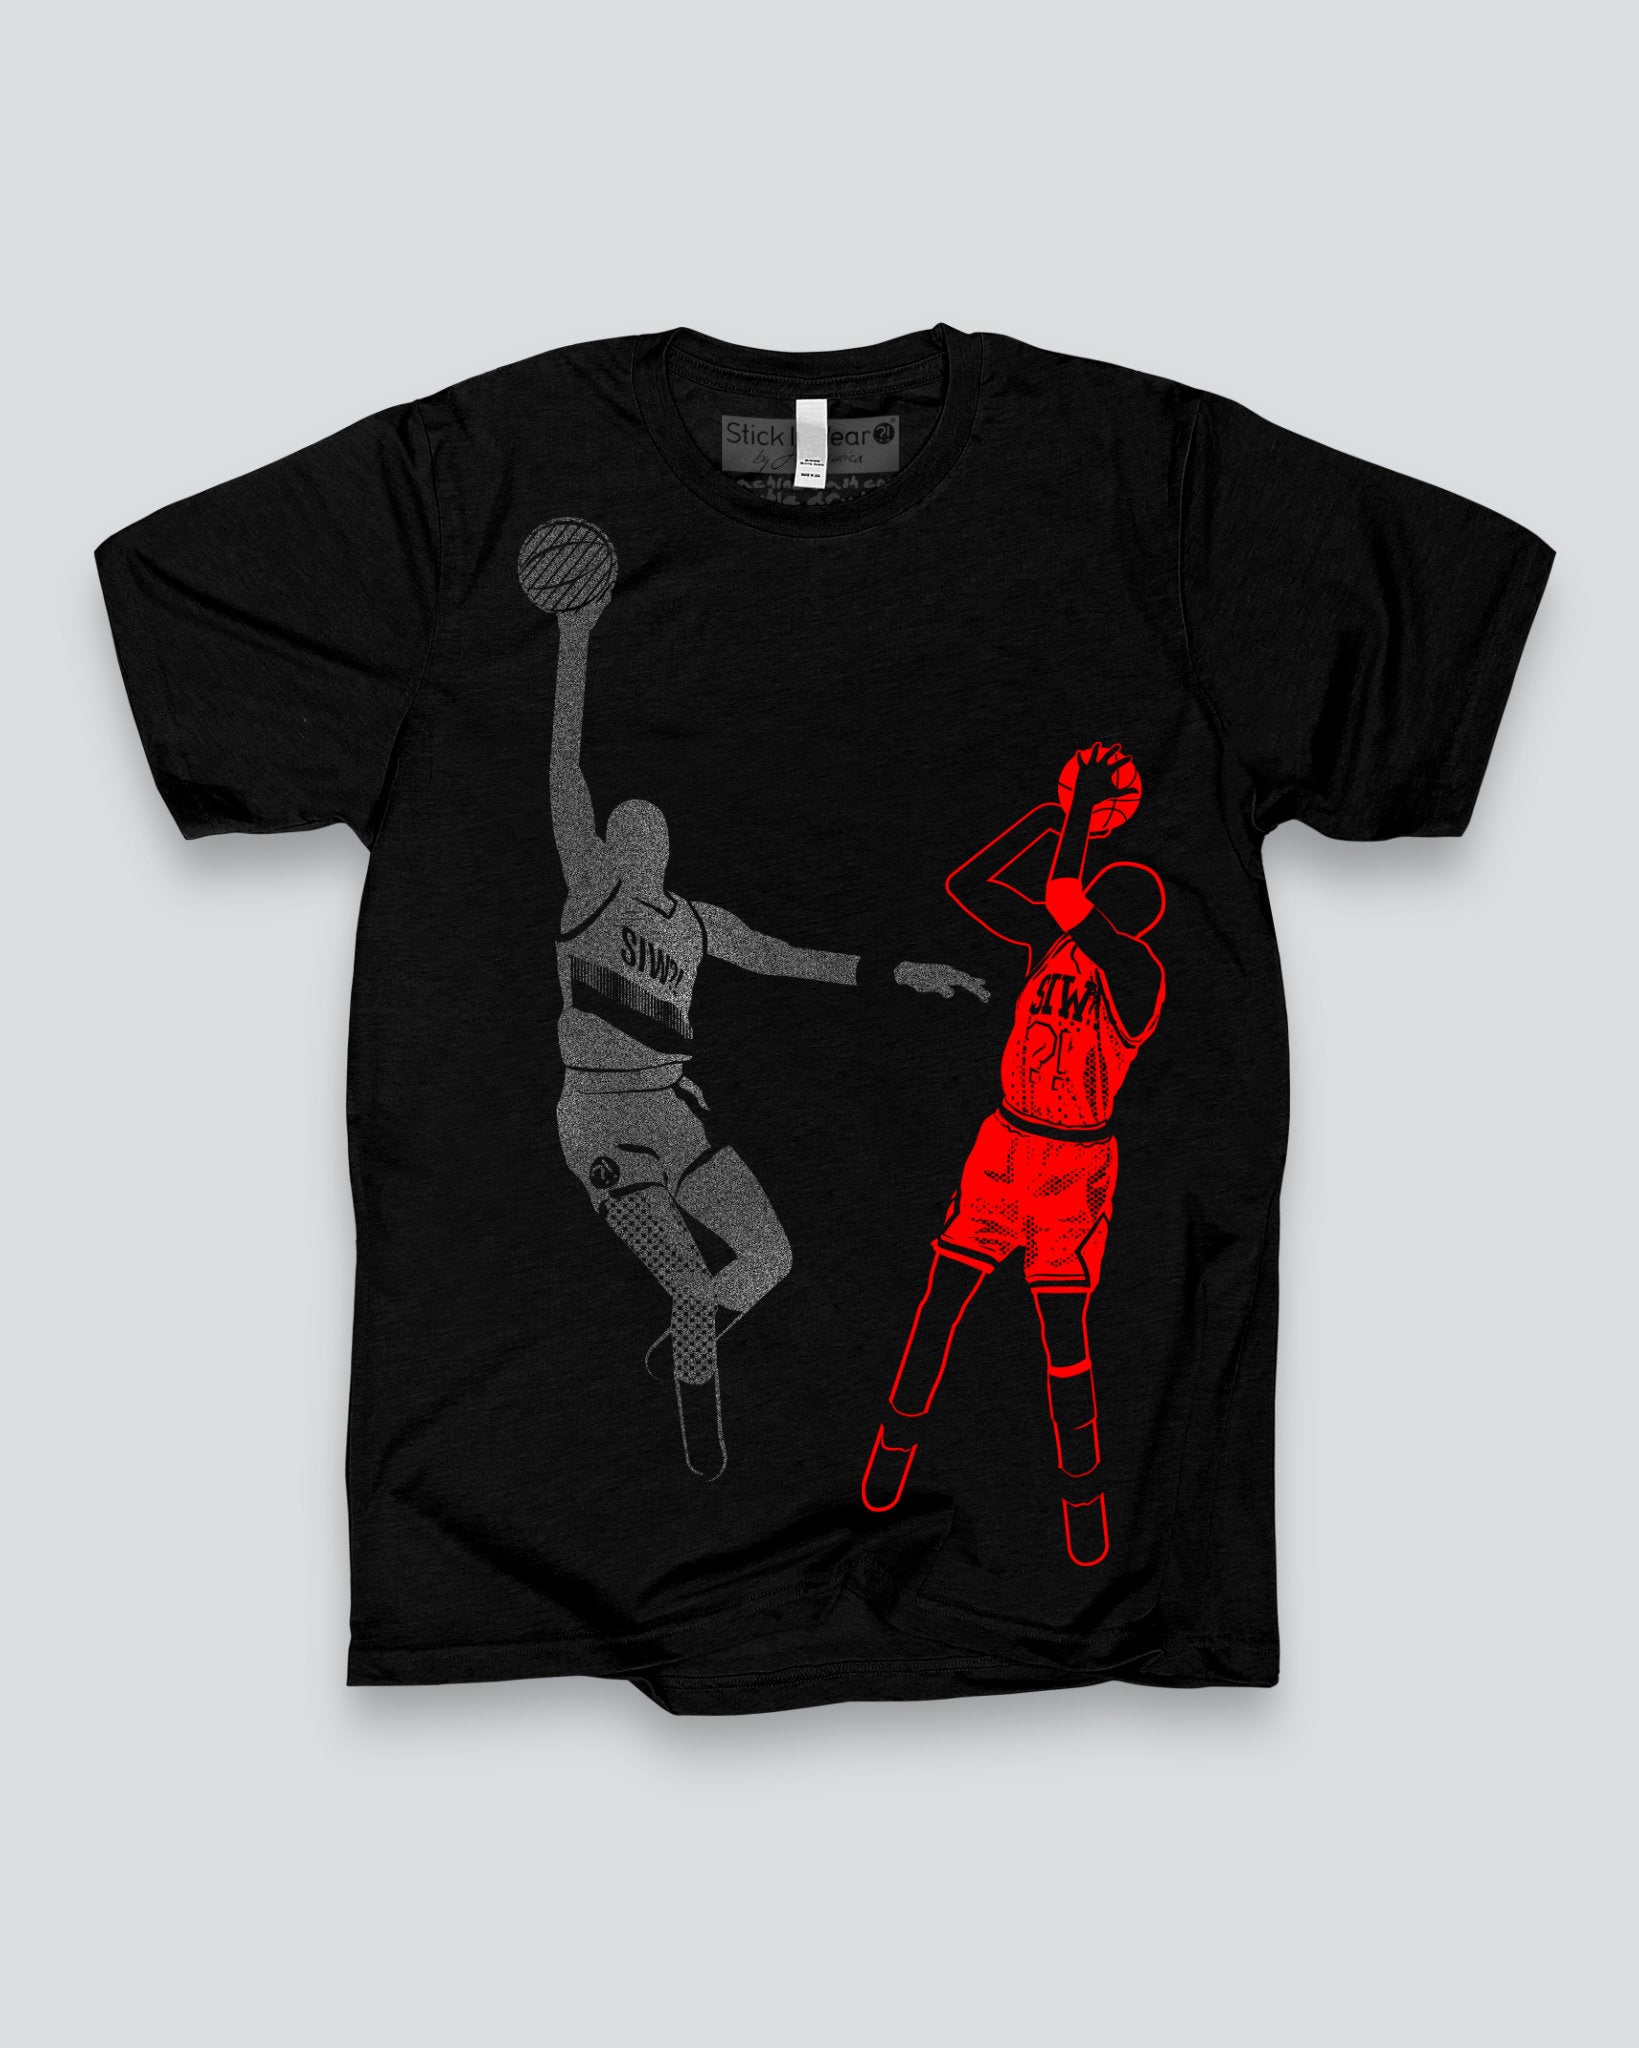 Basketball Sports Fashion Apparel | Stick It Wear?!